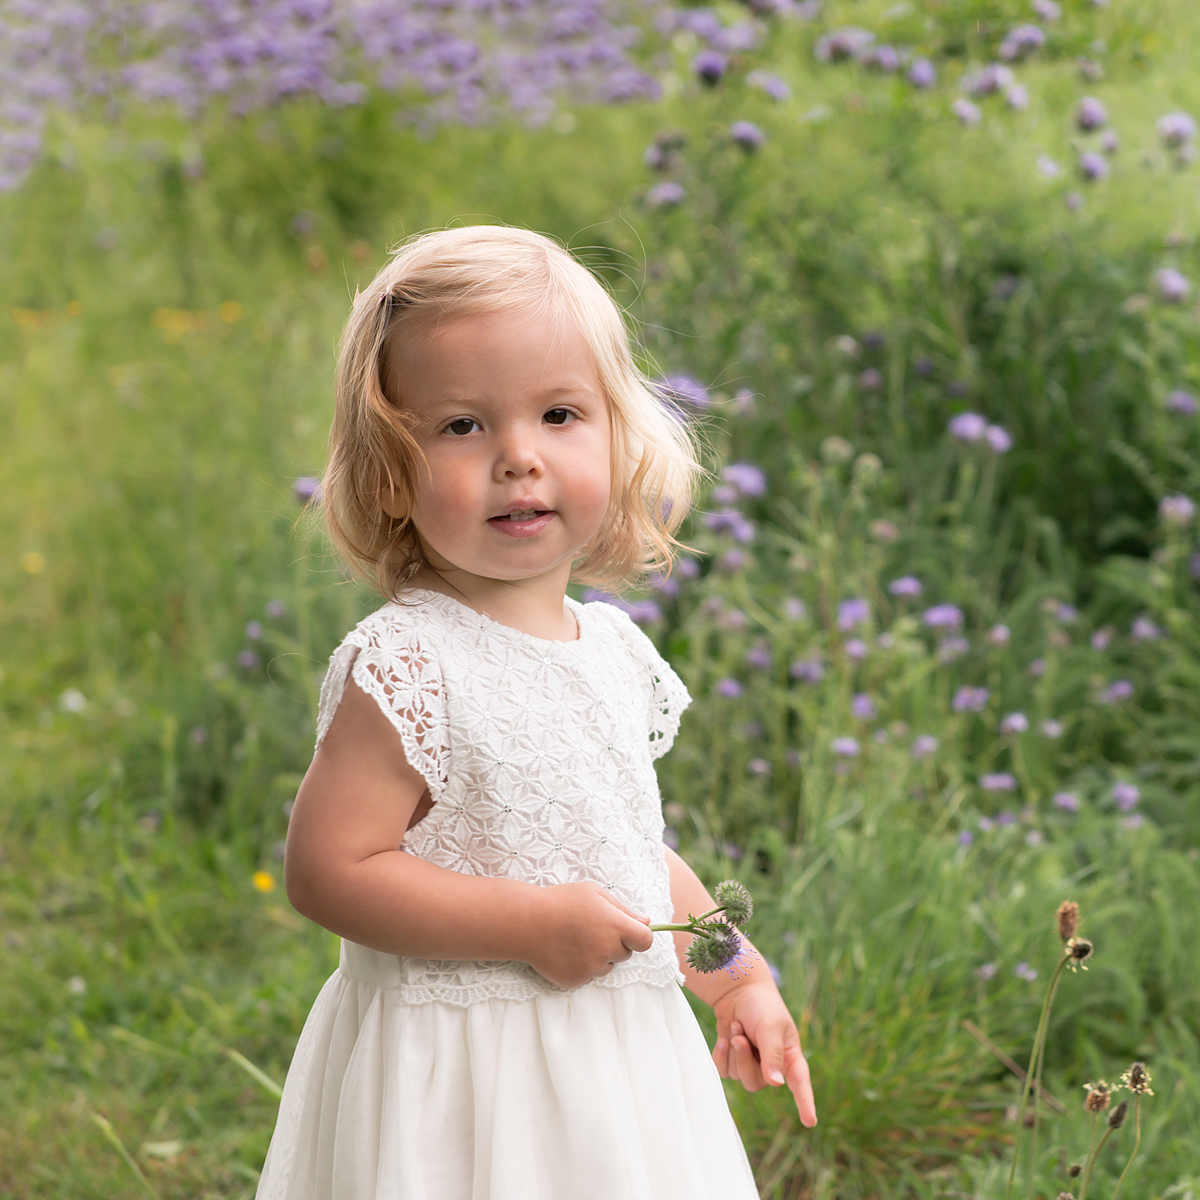 Little girl holds a flower in a field of wildflowers in Crane Park